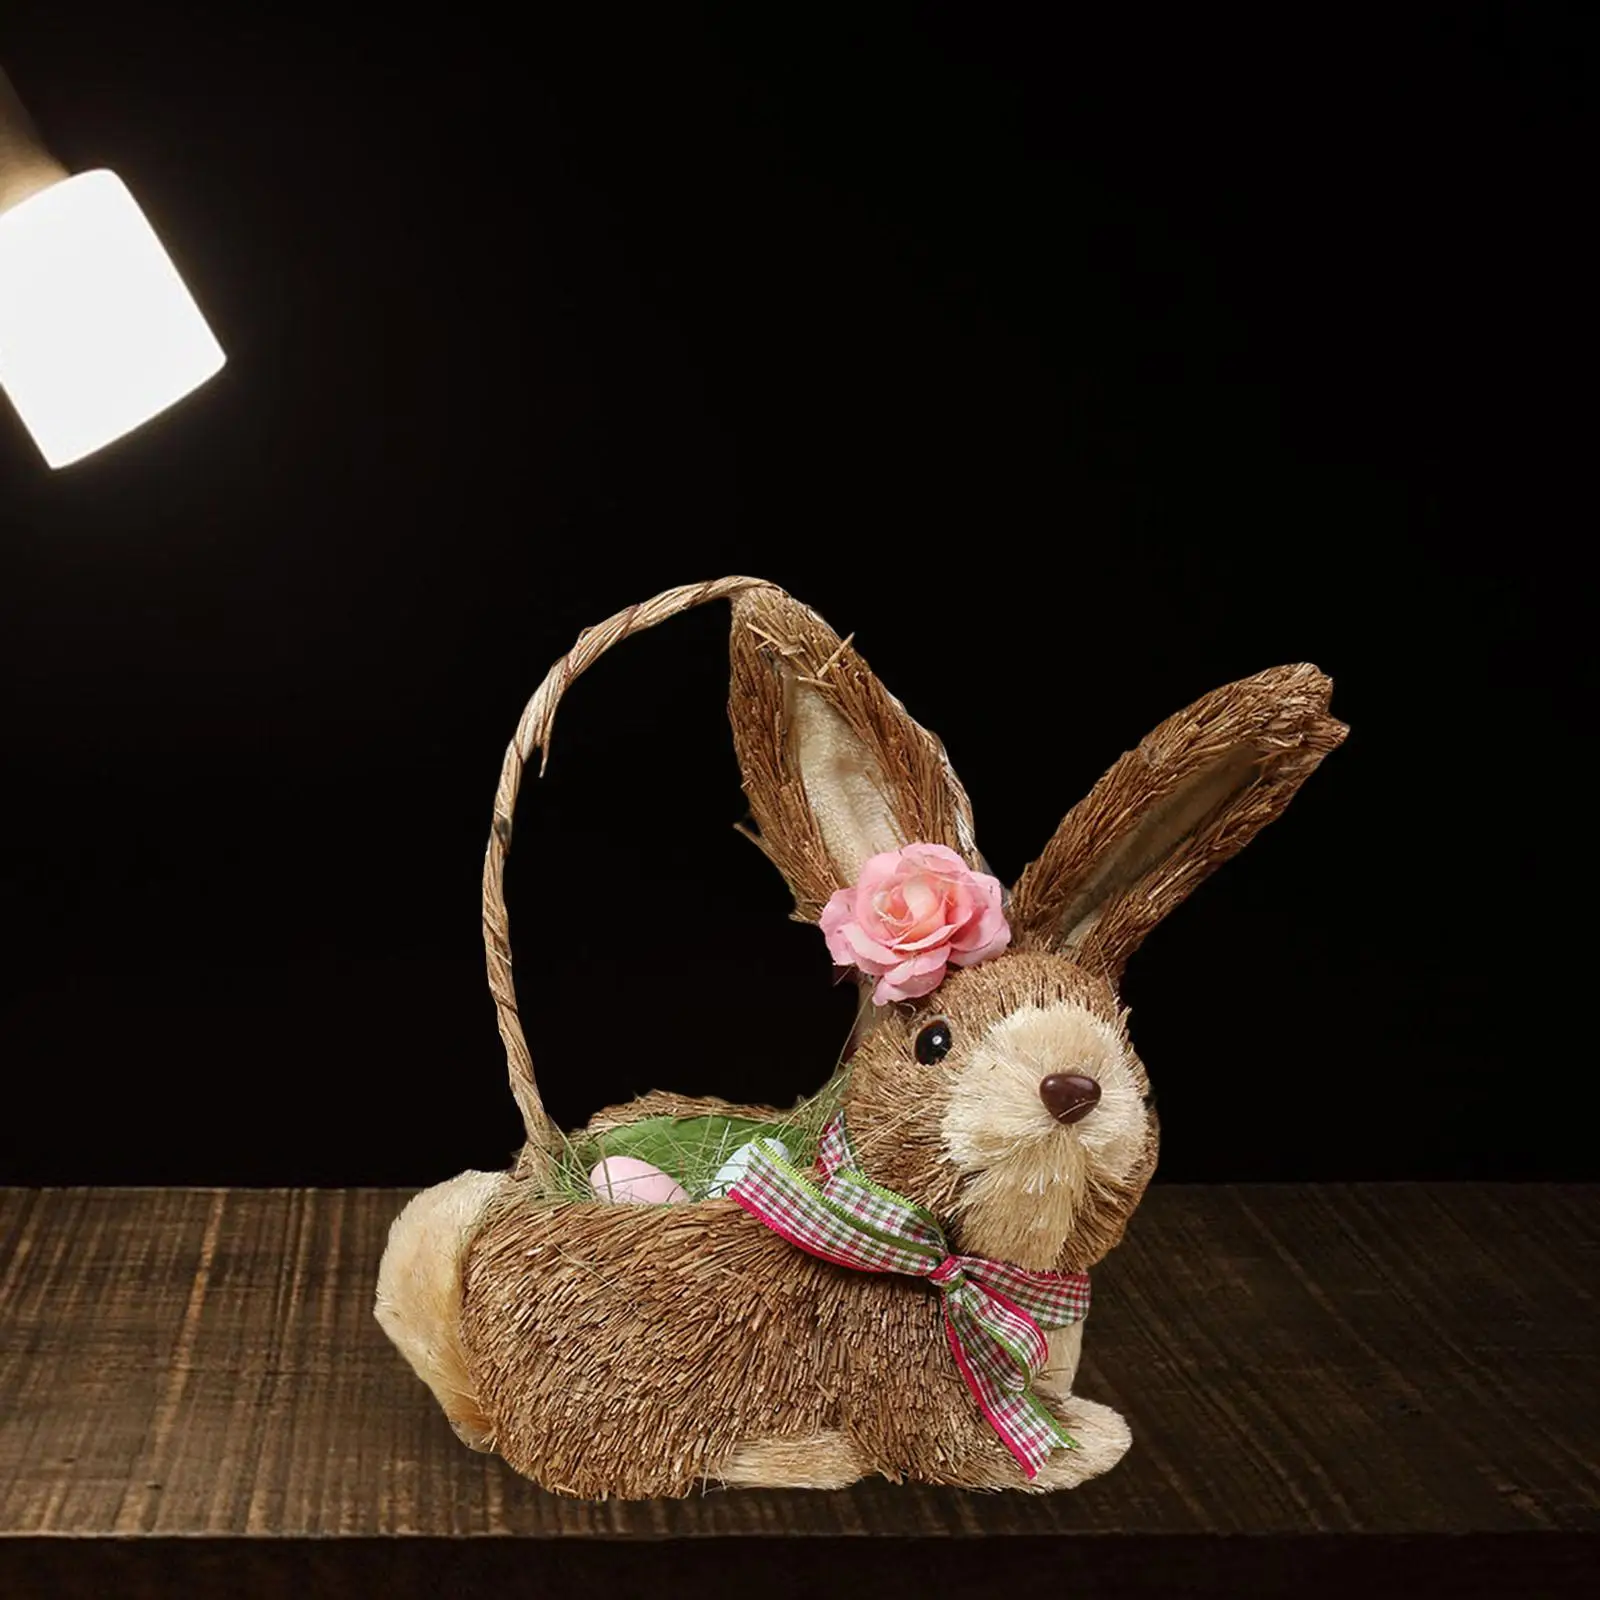 Straw Rabbit Decoration Filled Eggs Basket for Indoor Outdoor Spring Decor